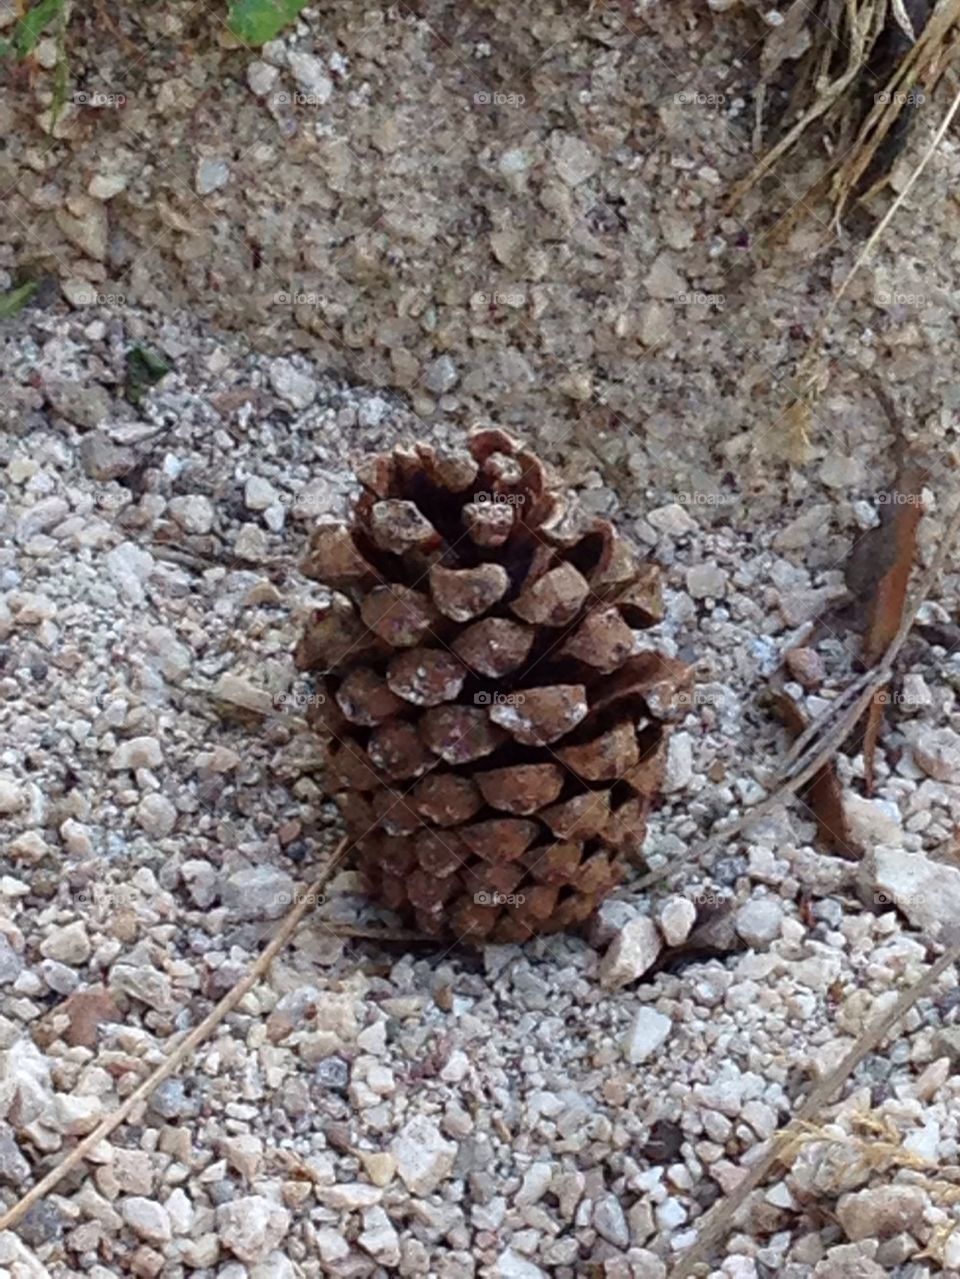 Cone in the gravel